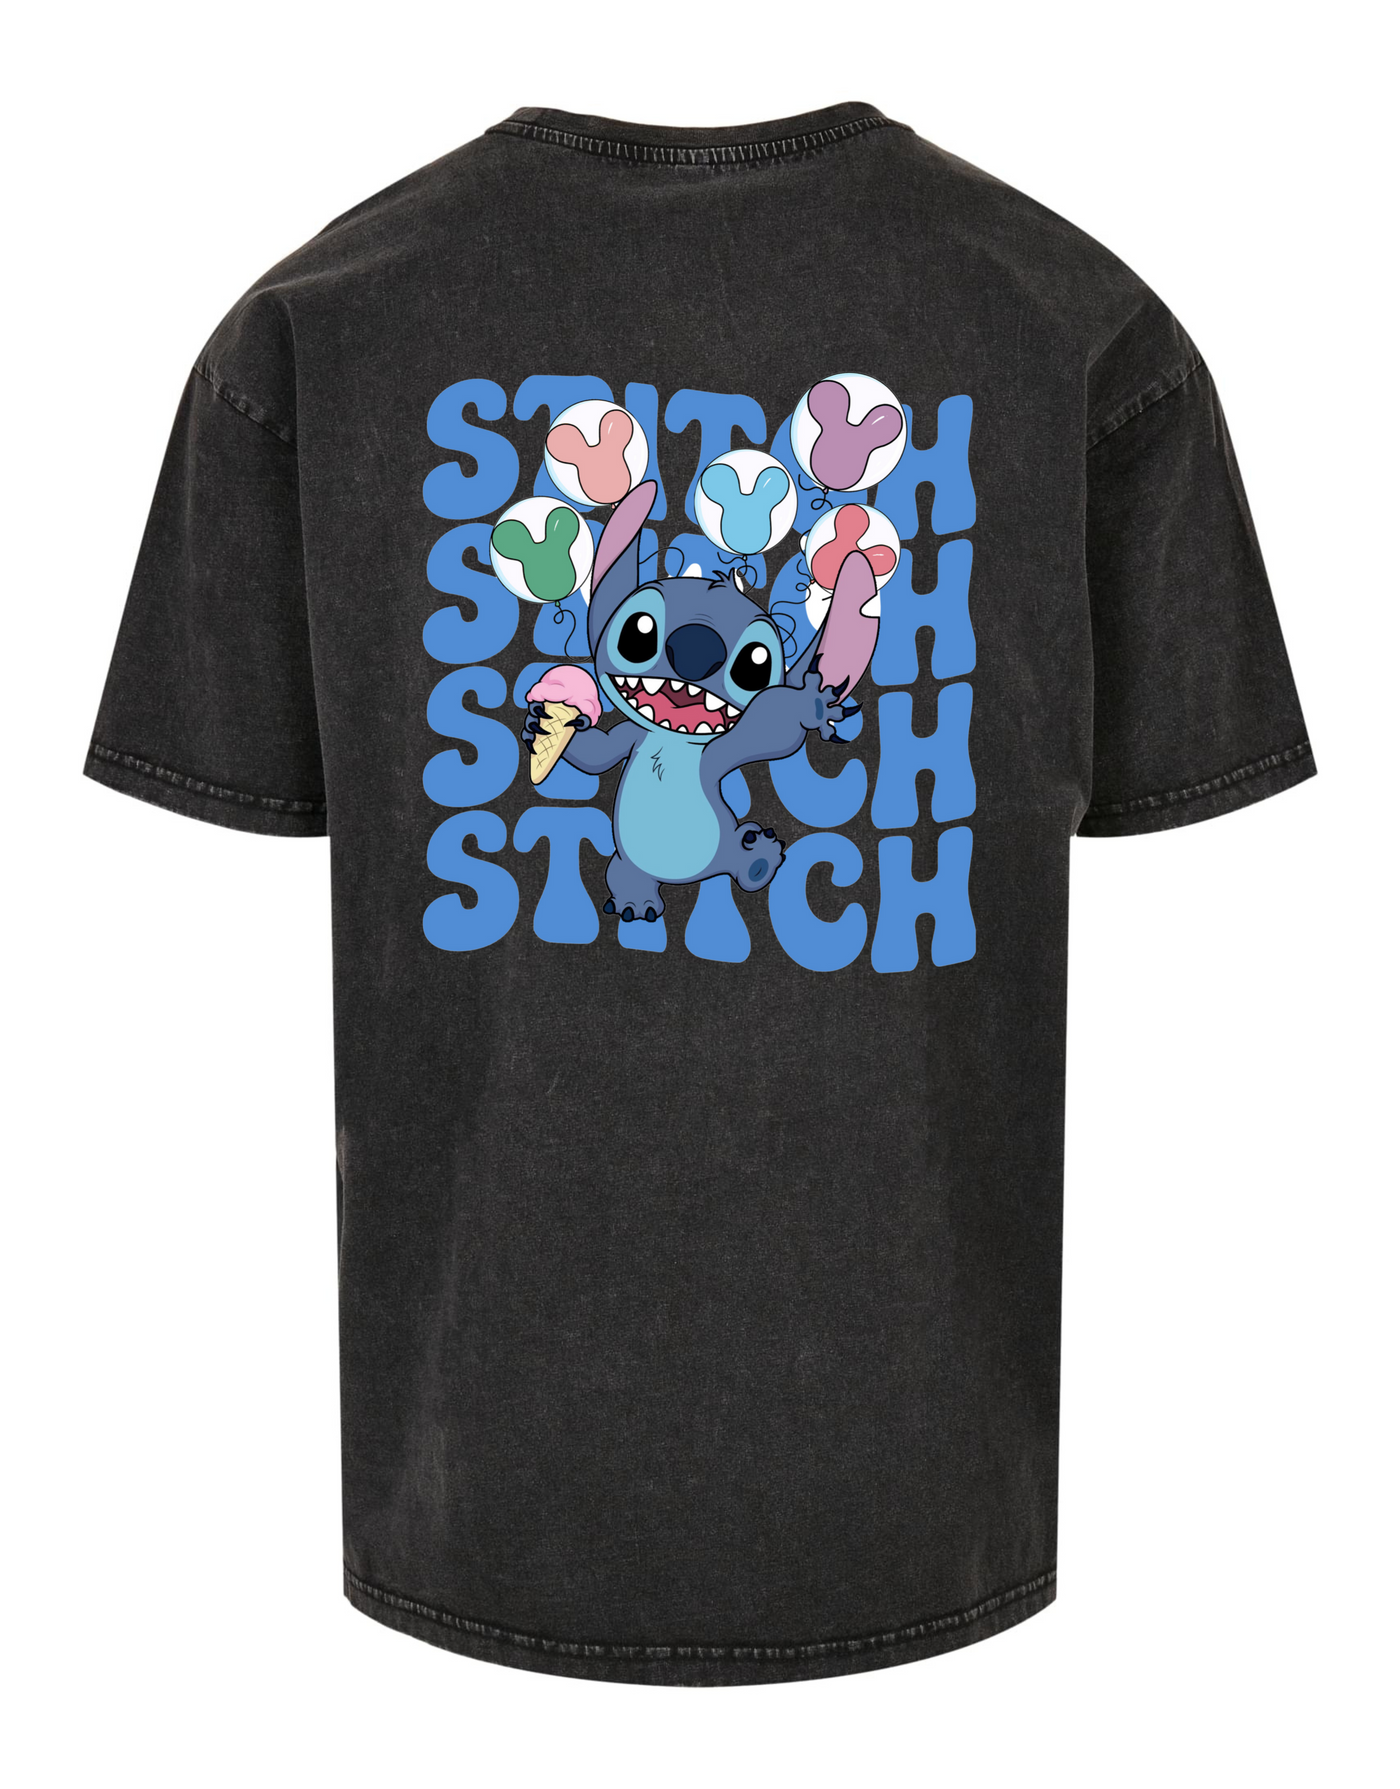 Black "Stitch" Front & Back Print Unisex Acid Wash T-Shirt